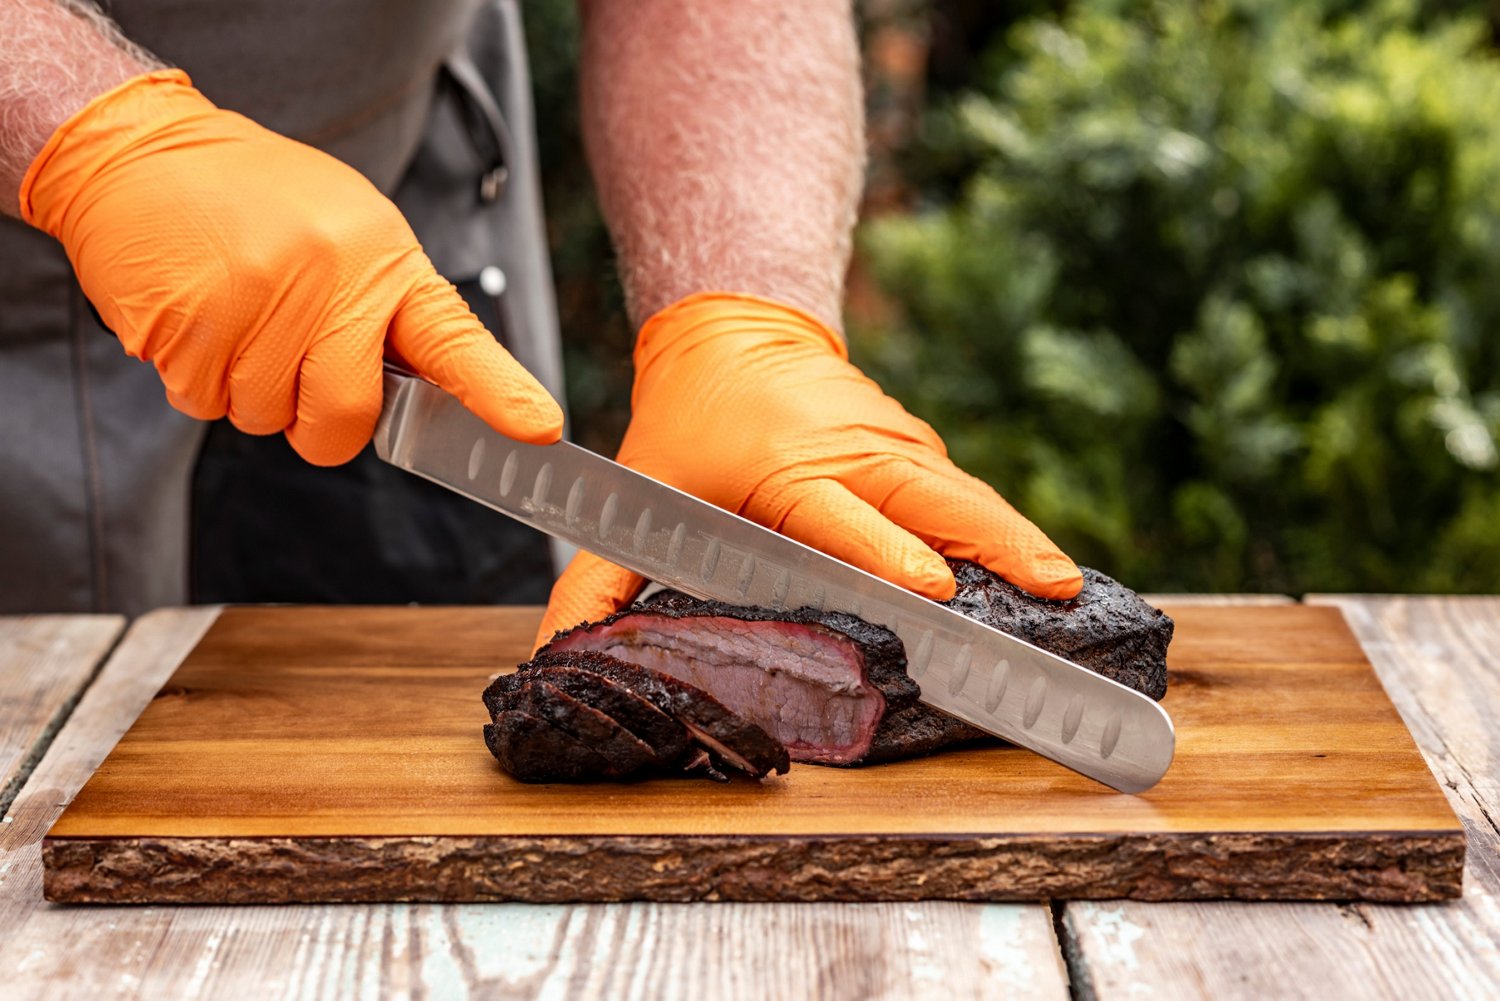 Oklahoma Joe's Blacksmith Stainless Steel 3-Piece BBQ Knife Set & Case